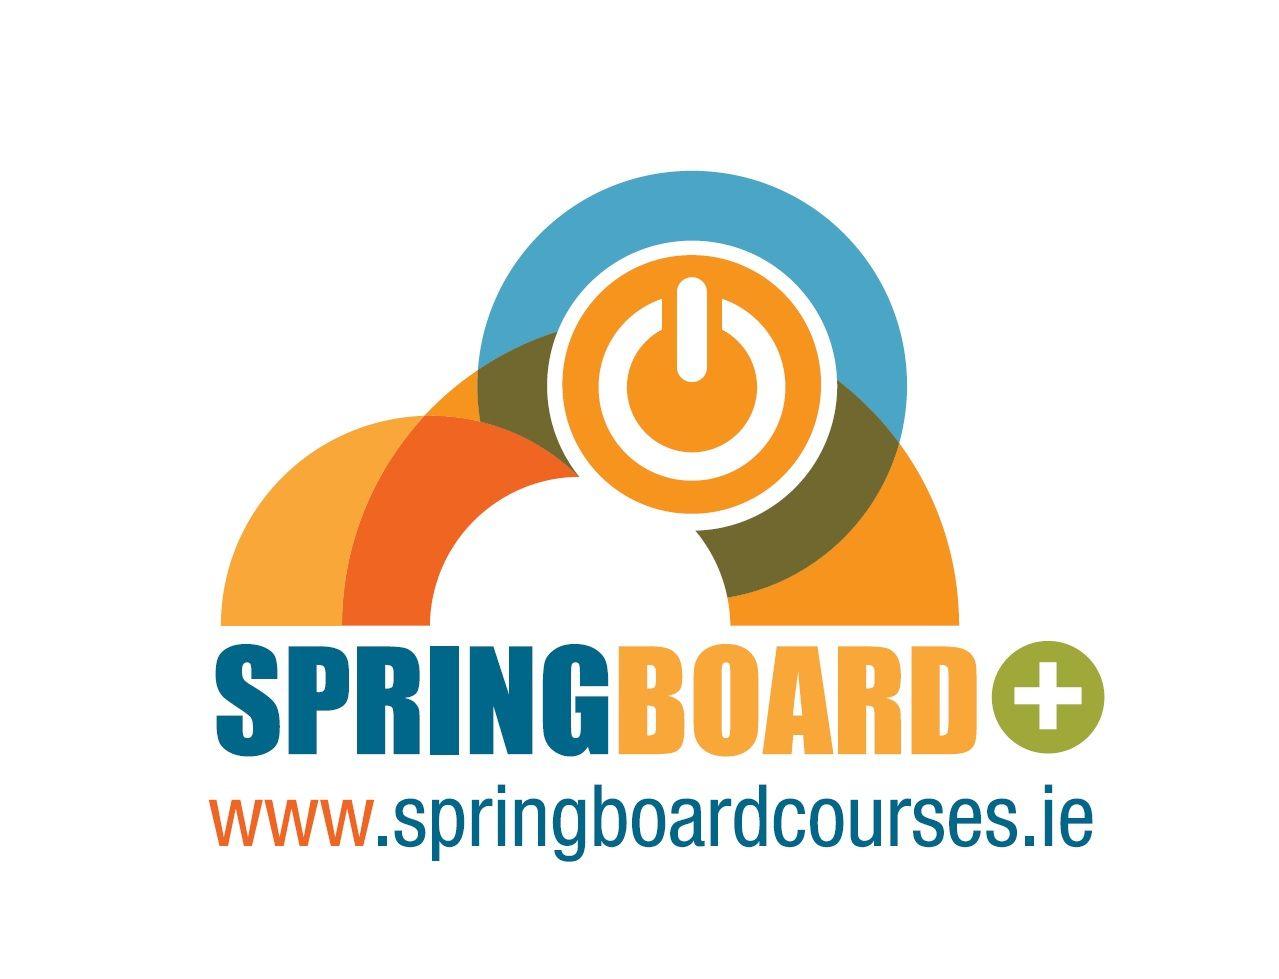 Springboard Logo - HEA - Springboard+